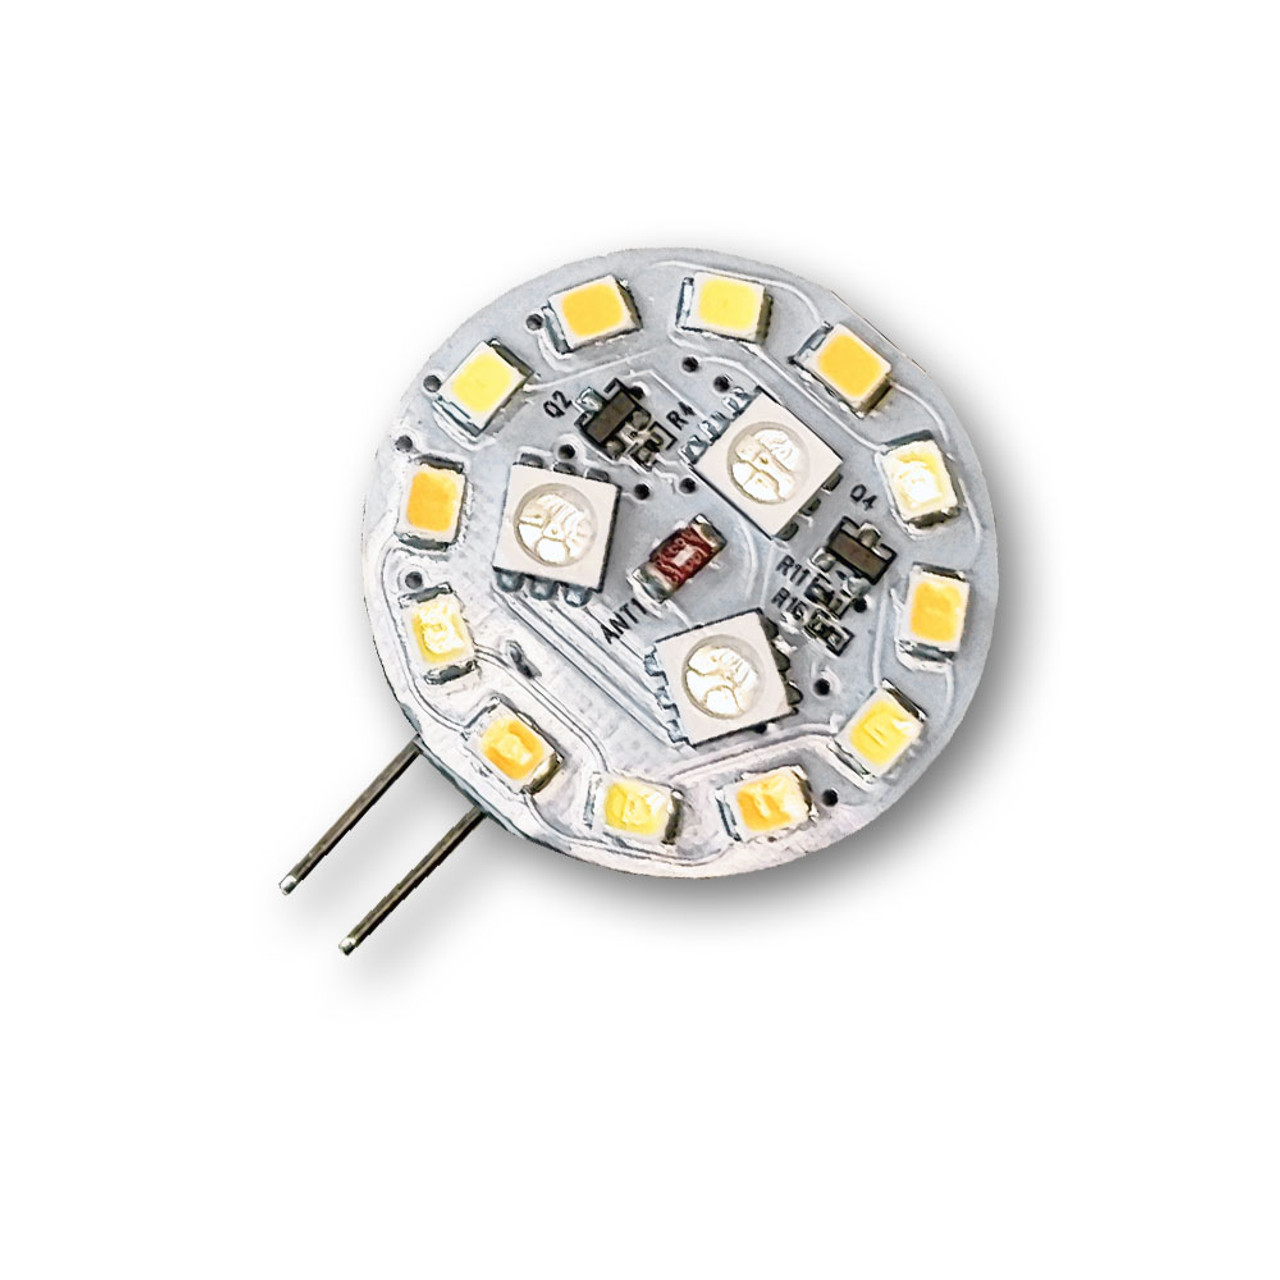 Mega LED - LED Replacement Bulb - G4 Side Pins Type, 3x1.1W, 3x110 Lumens, Warm White, RGB (34126) - Apollo Lighting